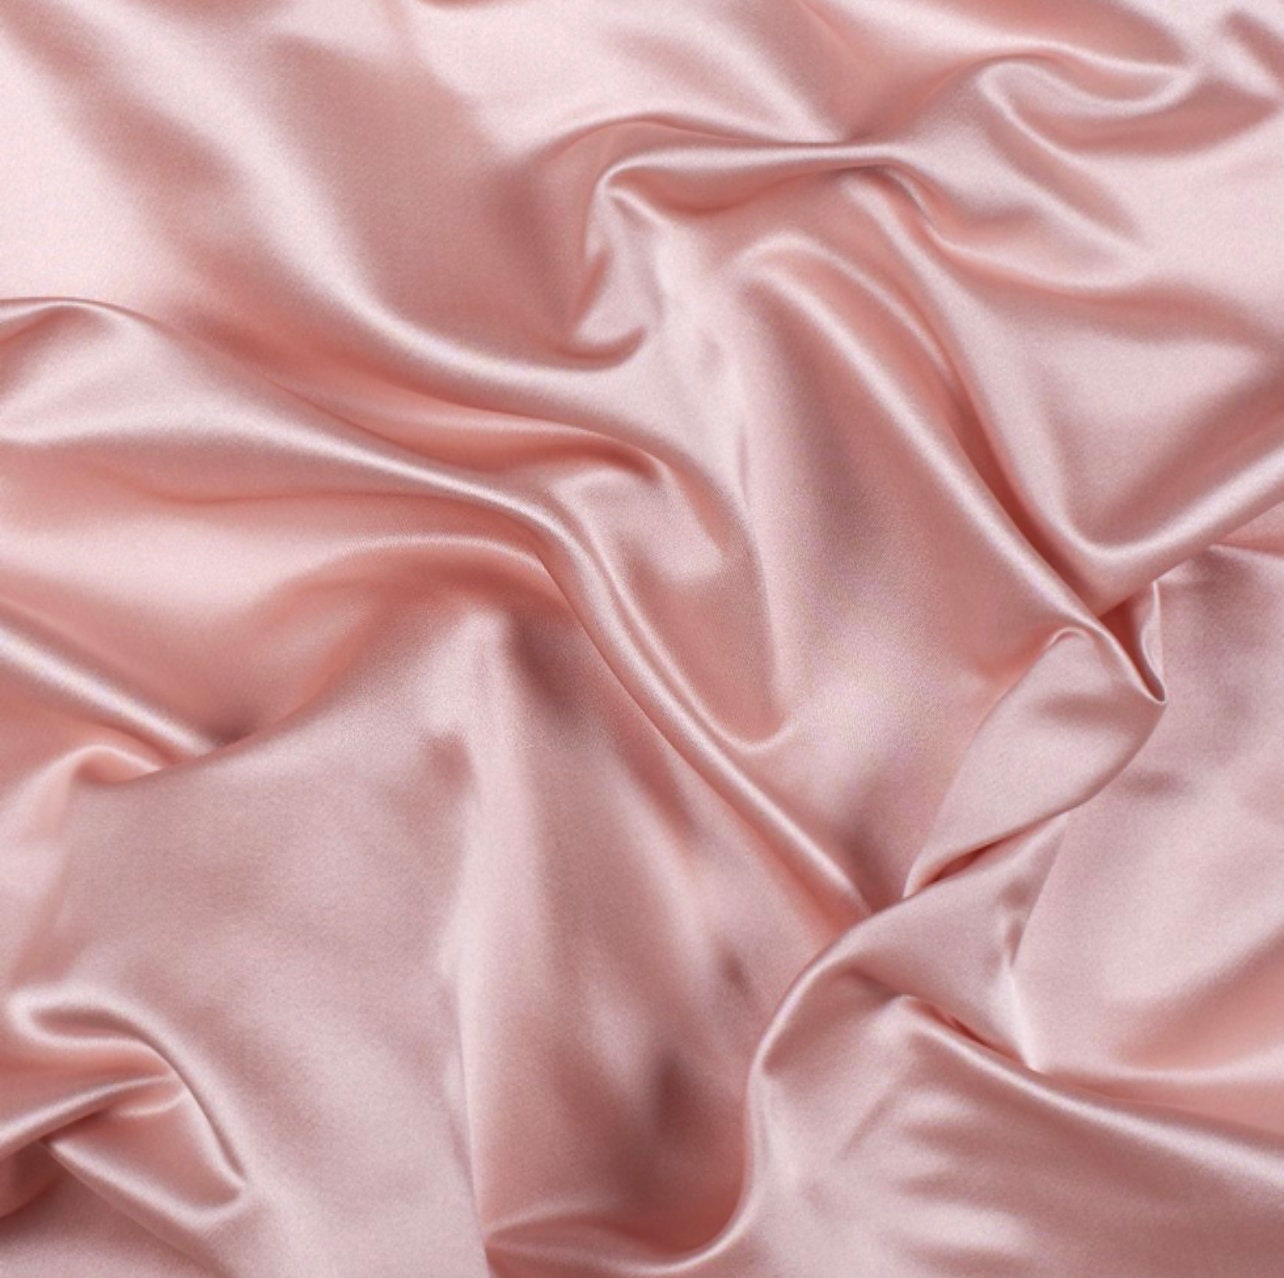 Blush Pink Satin Fabric Premium Quality Blush Satin Fabric Medium Weight  Wedding Dress Fabric Sold by the Yard, Bridal Satin Blush 